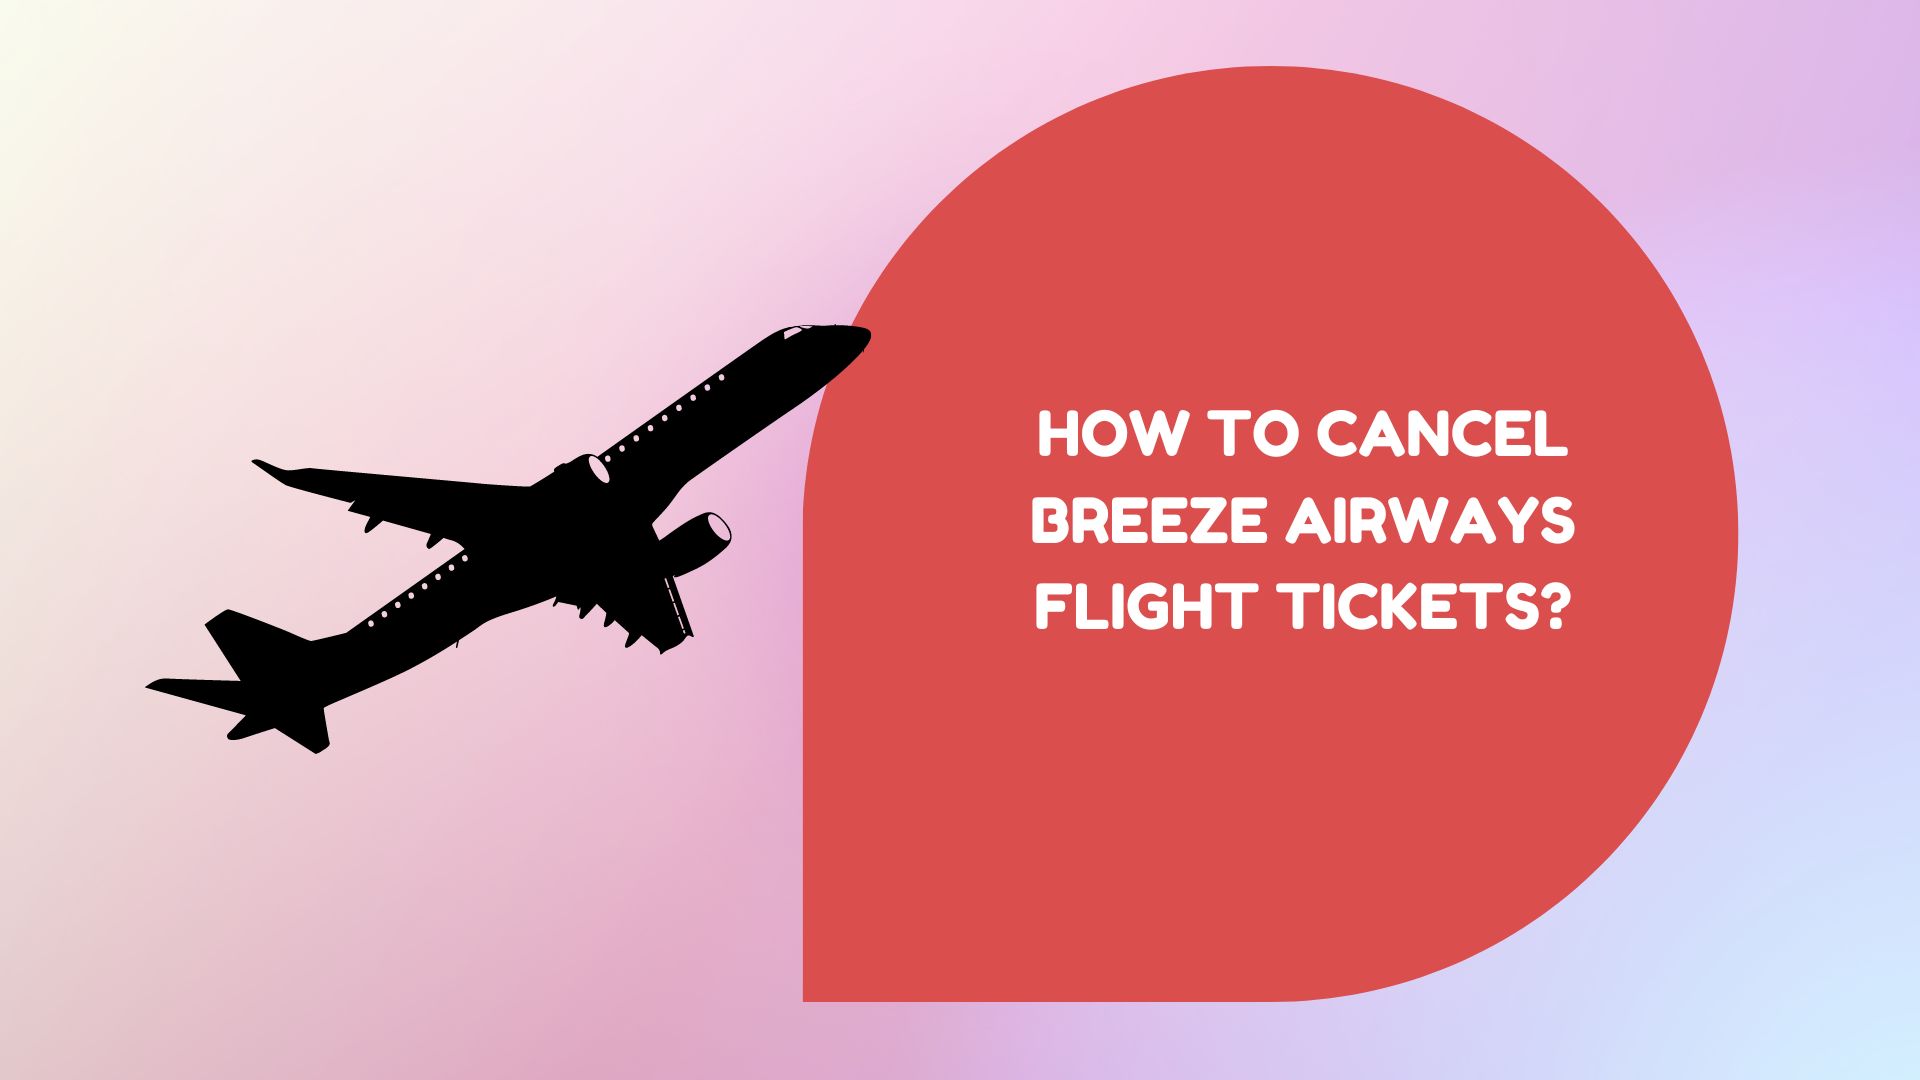 how to cancel breeze airways flight tickets647058b0b0212.jpg